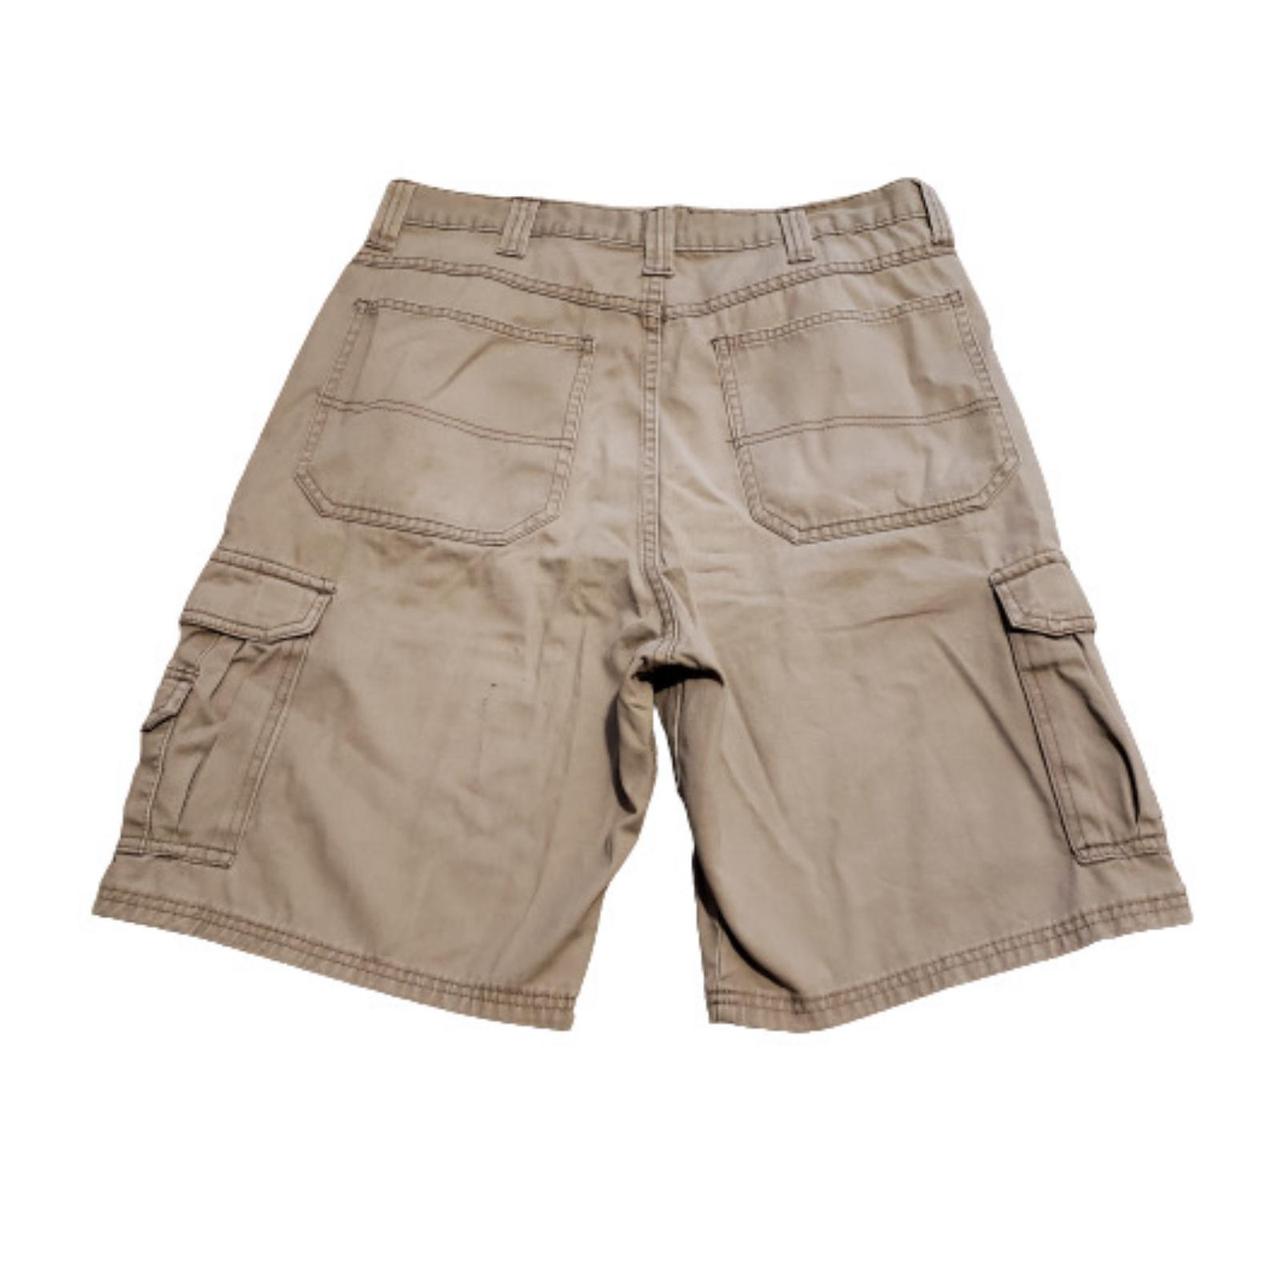 Wrangler Originals Cargo Shorts Men's 34 Tan Khaki... - Depop